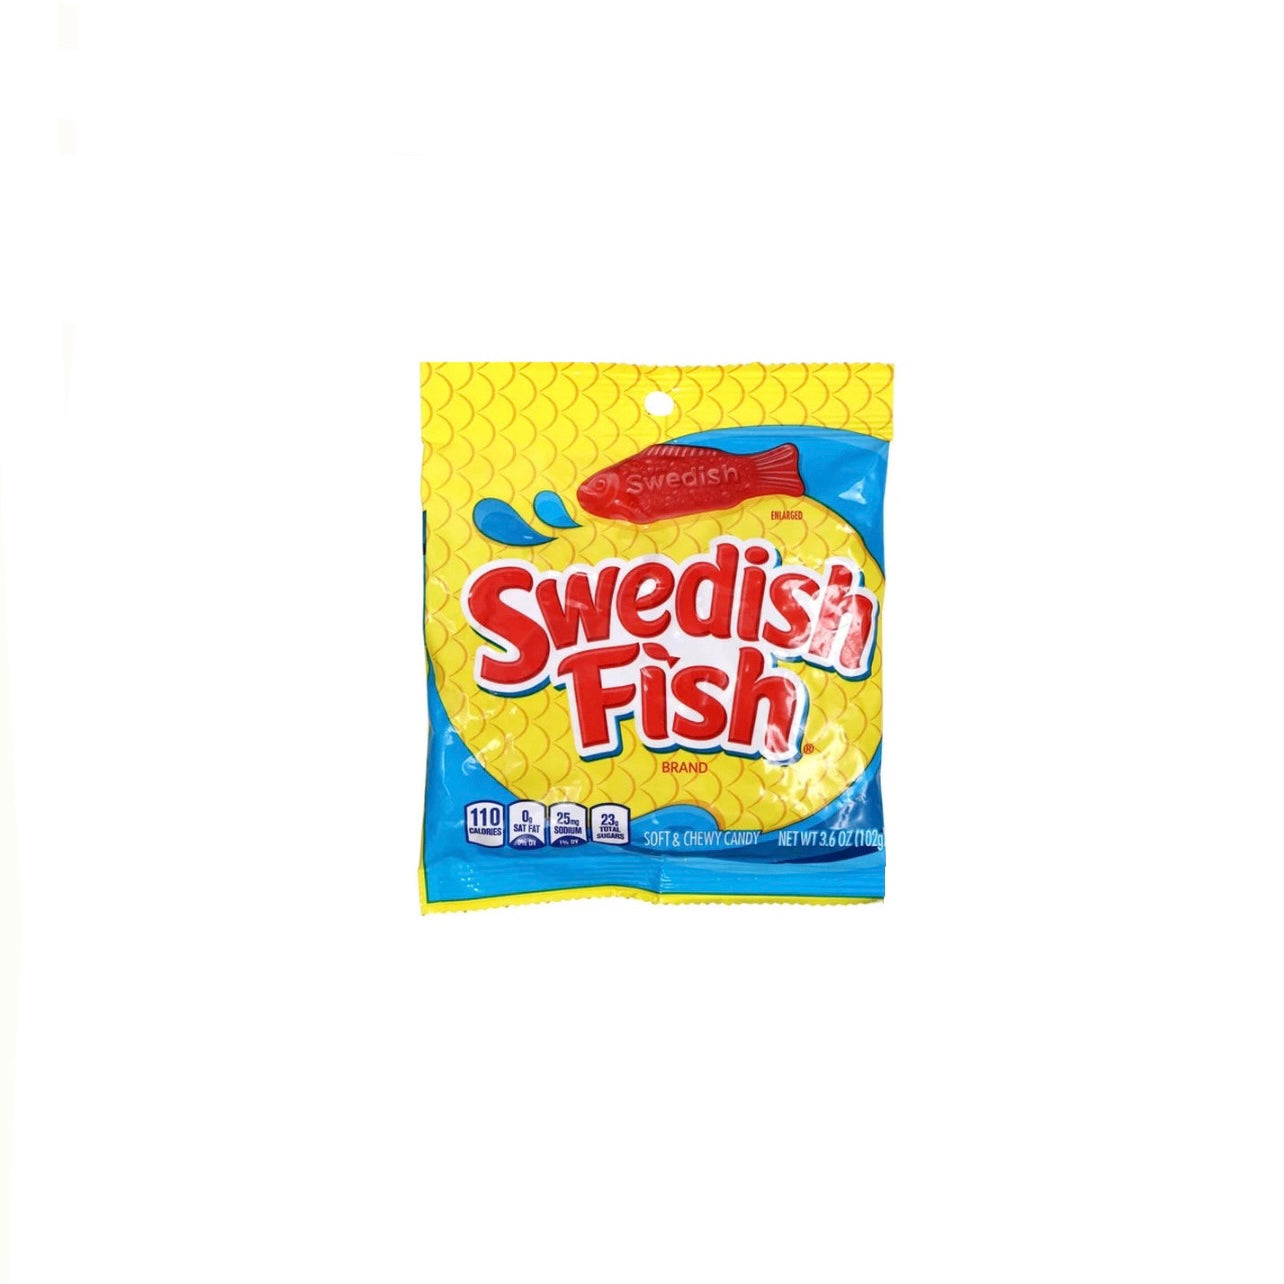 Swedish Fish Soft & Chewy Candy (8009199)